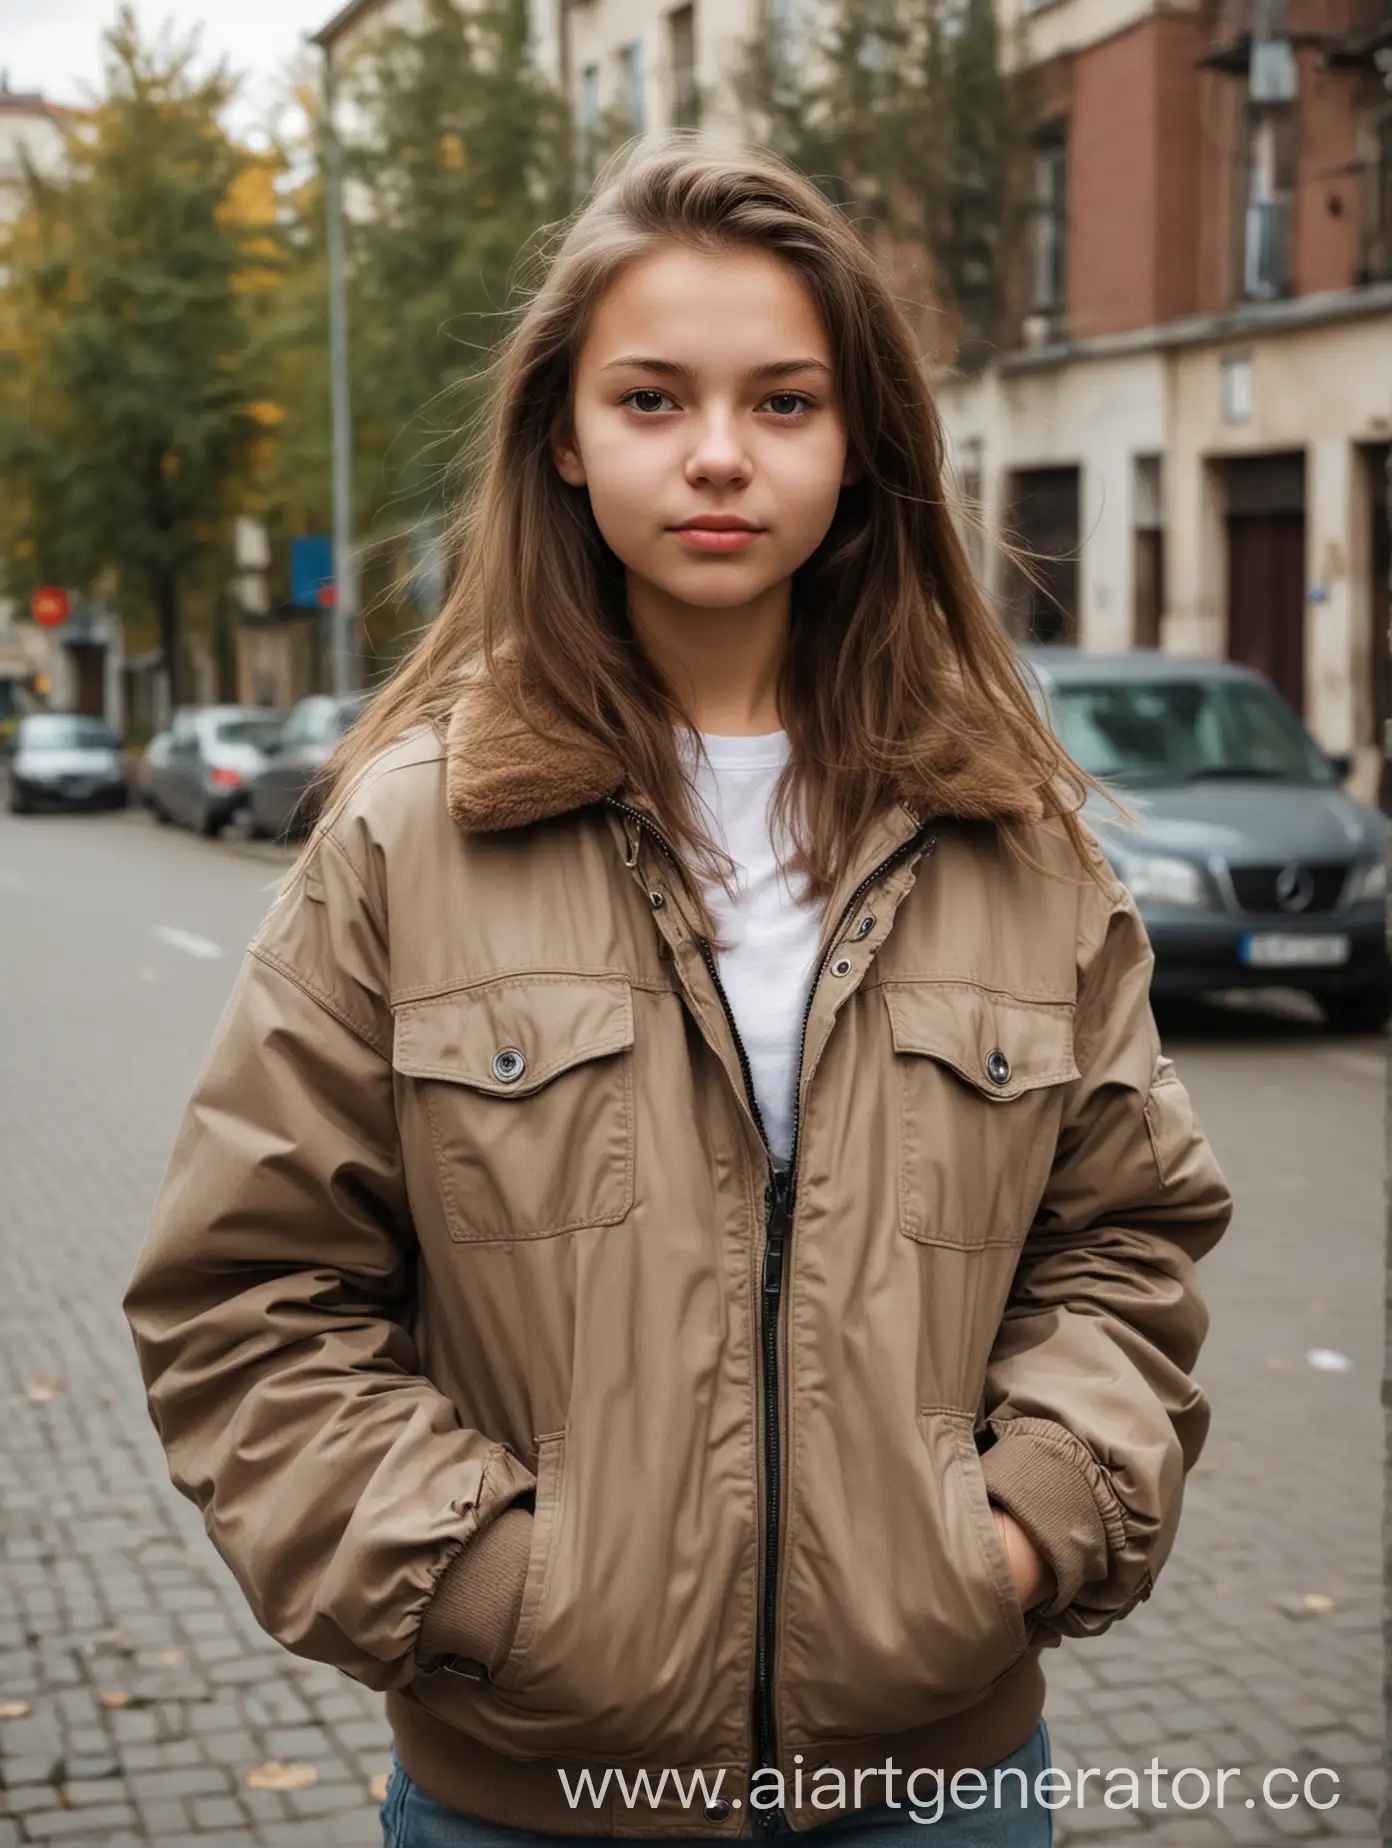 Casual-Teenage-Russian-Girl-in-a-Stylish-Jacket